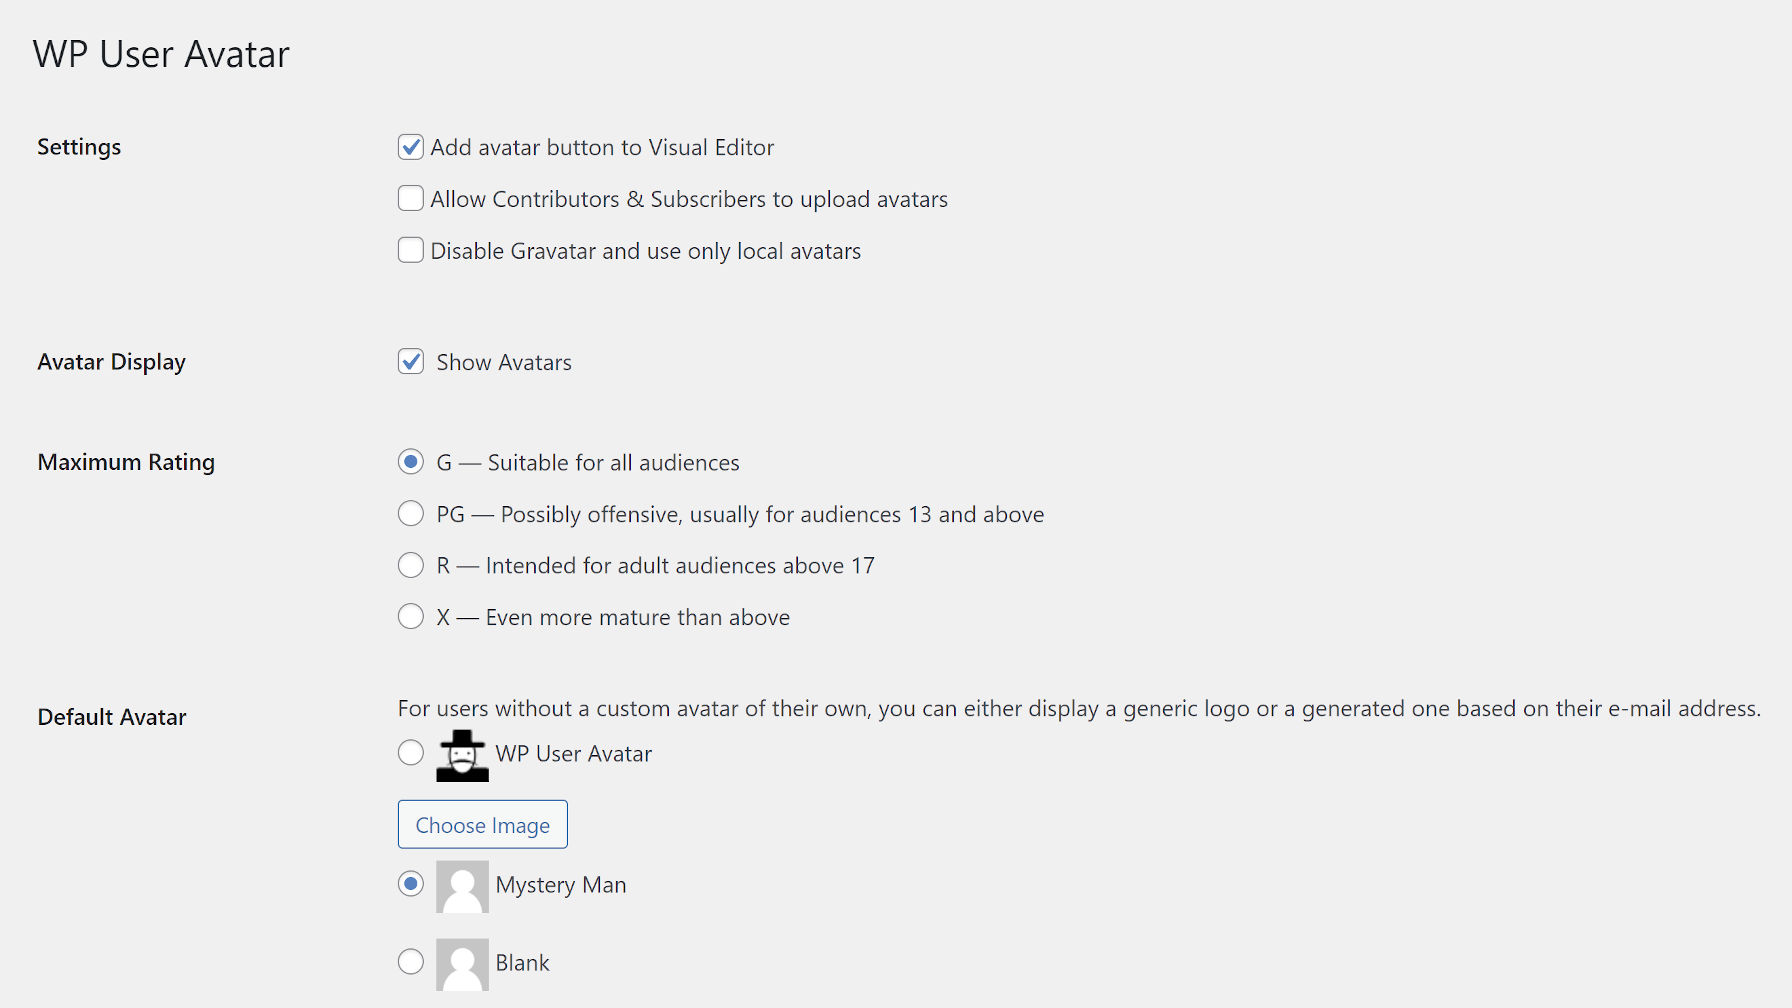 The original settings screen for the WP User Avatar plugin.